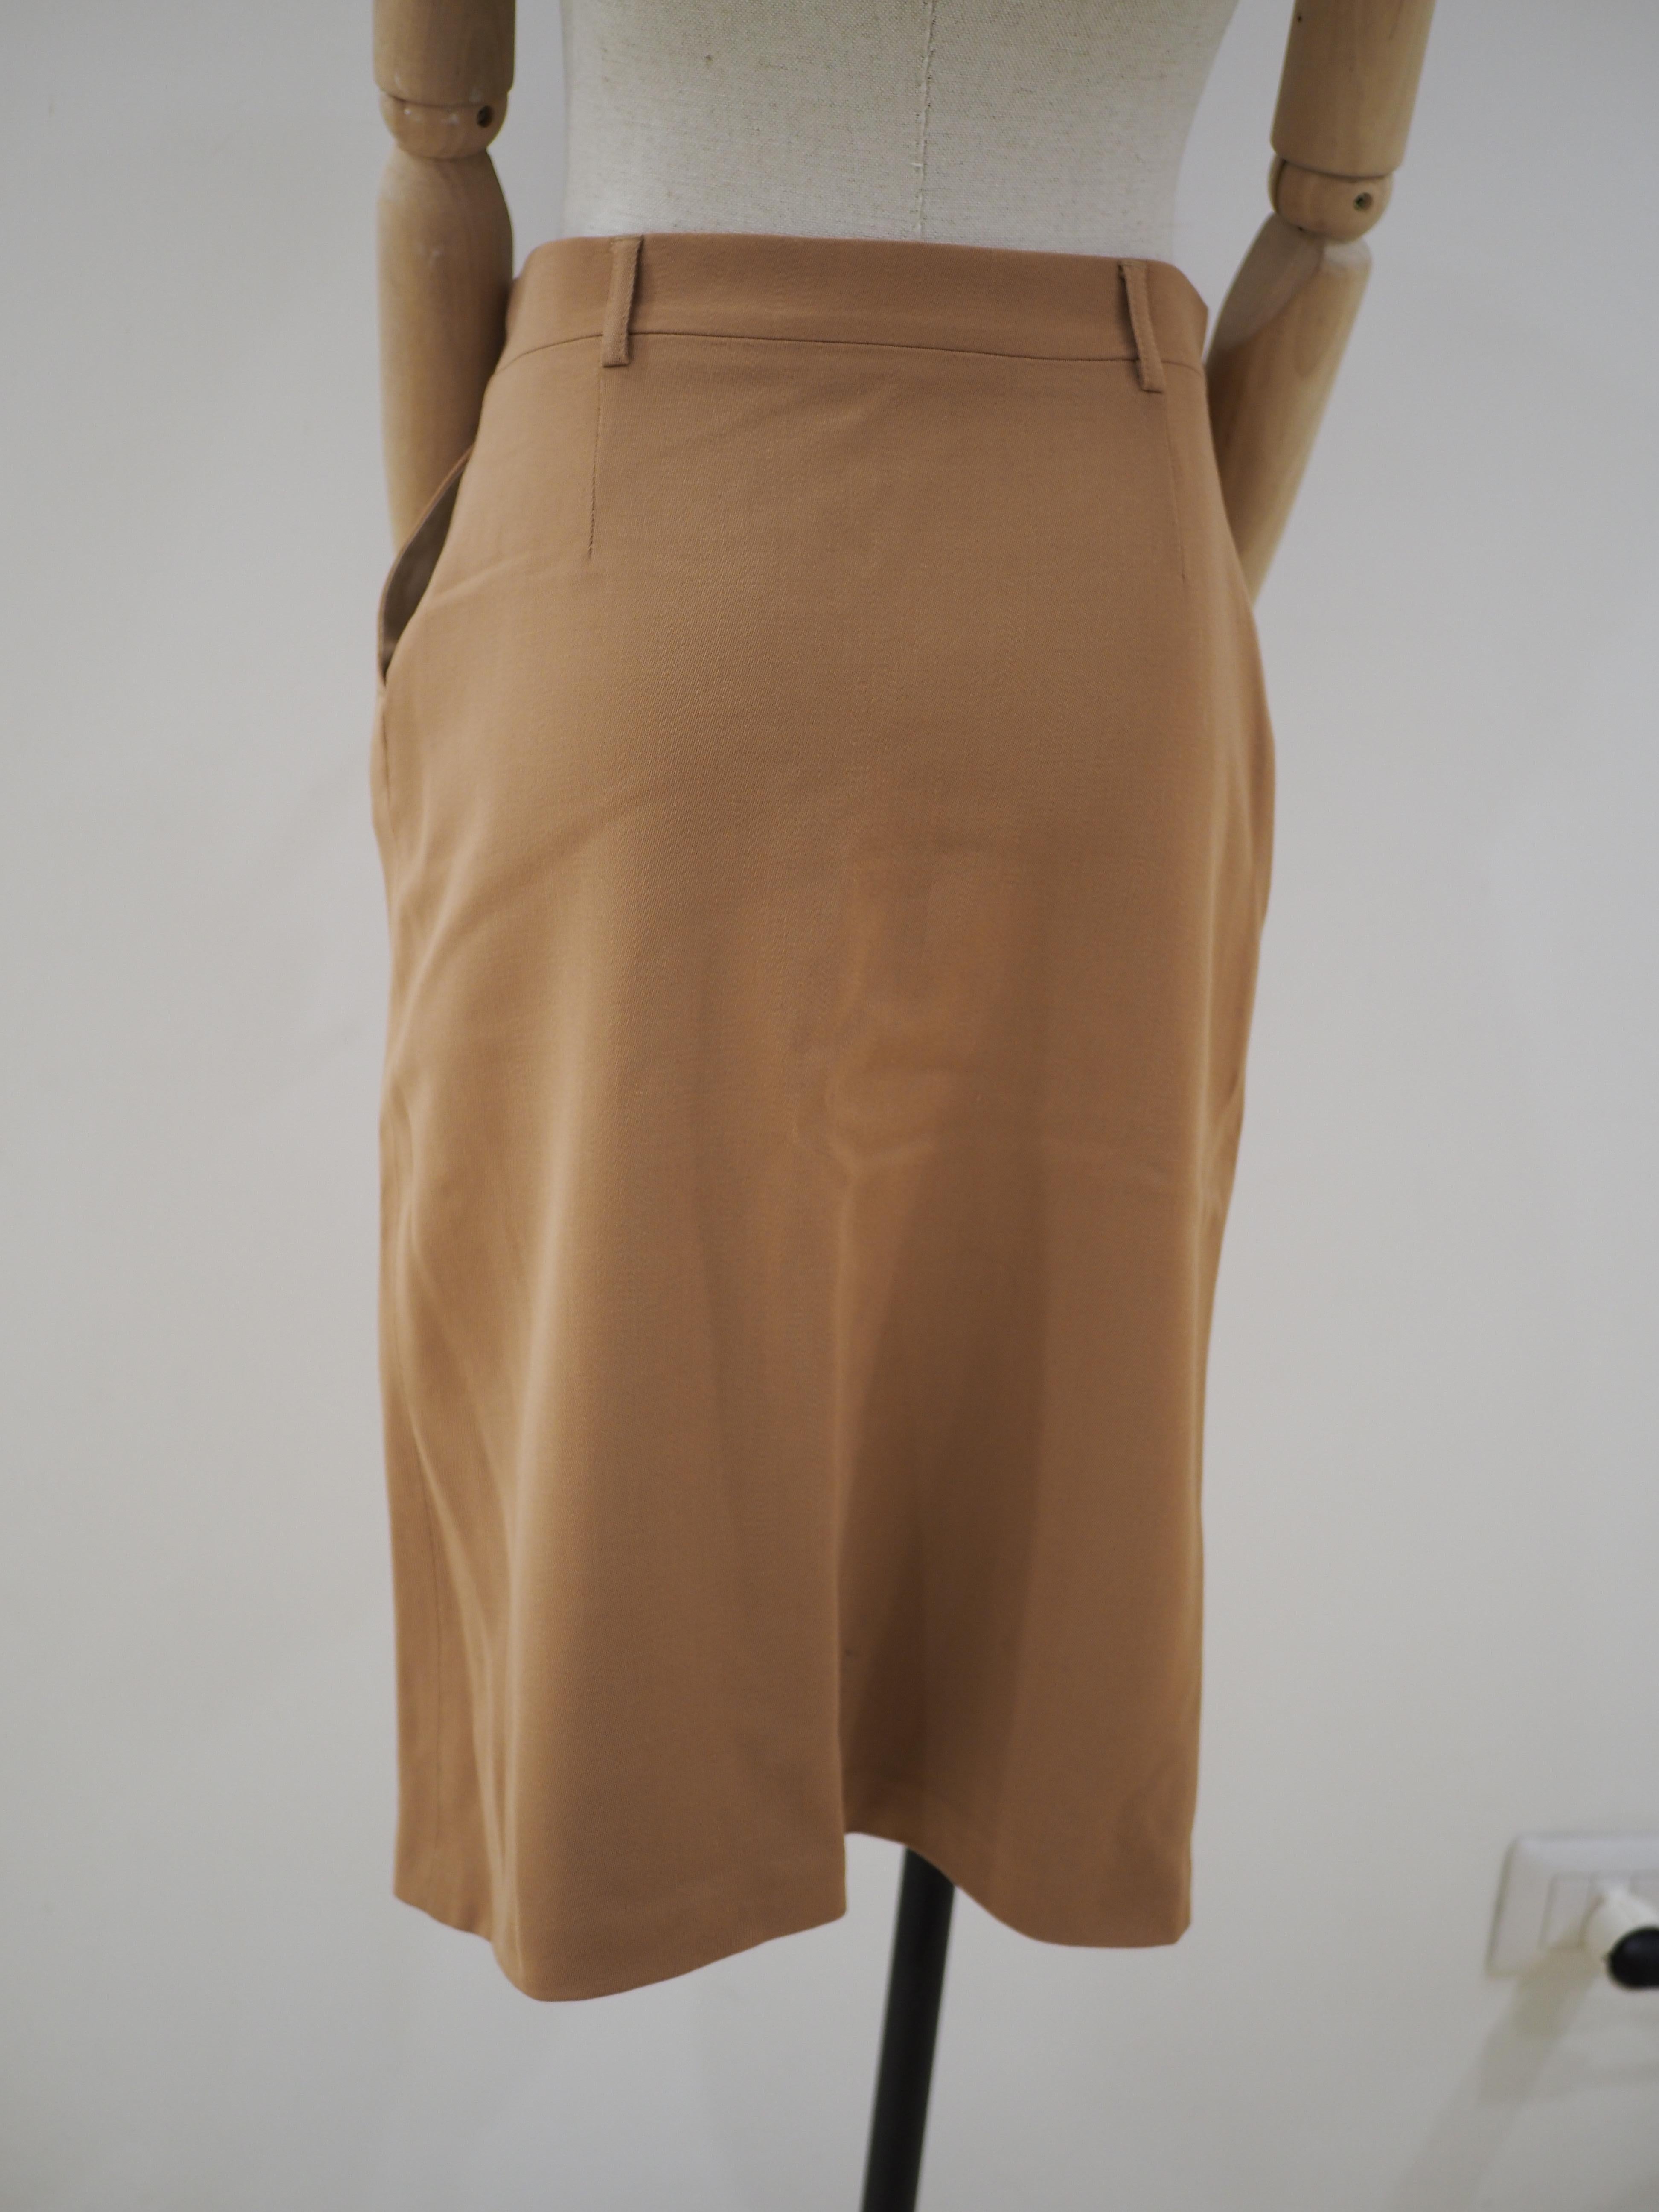 Fendi skirt In Good Condition For Sale In Capri, IT